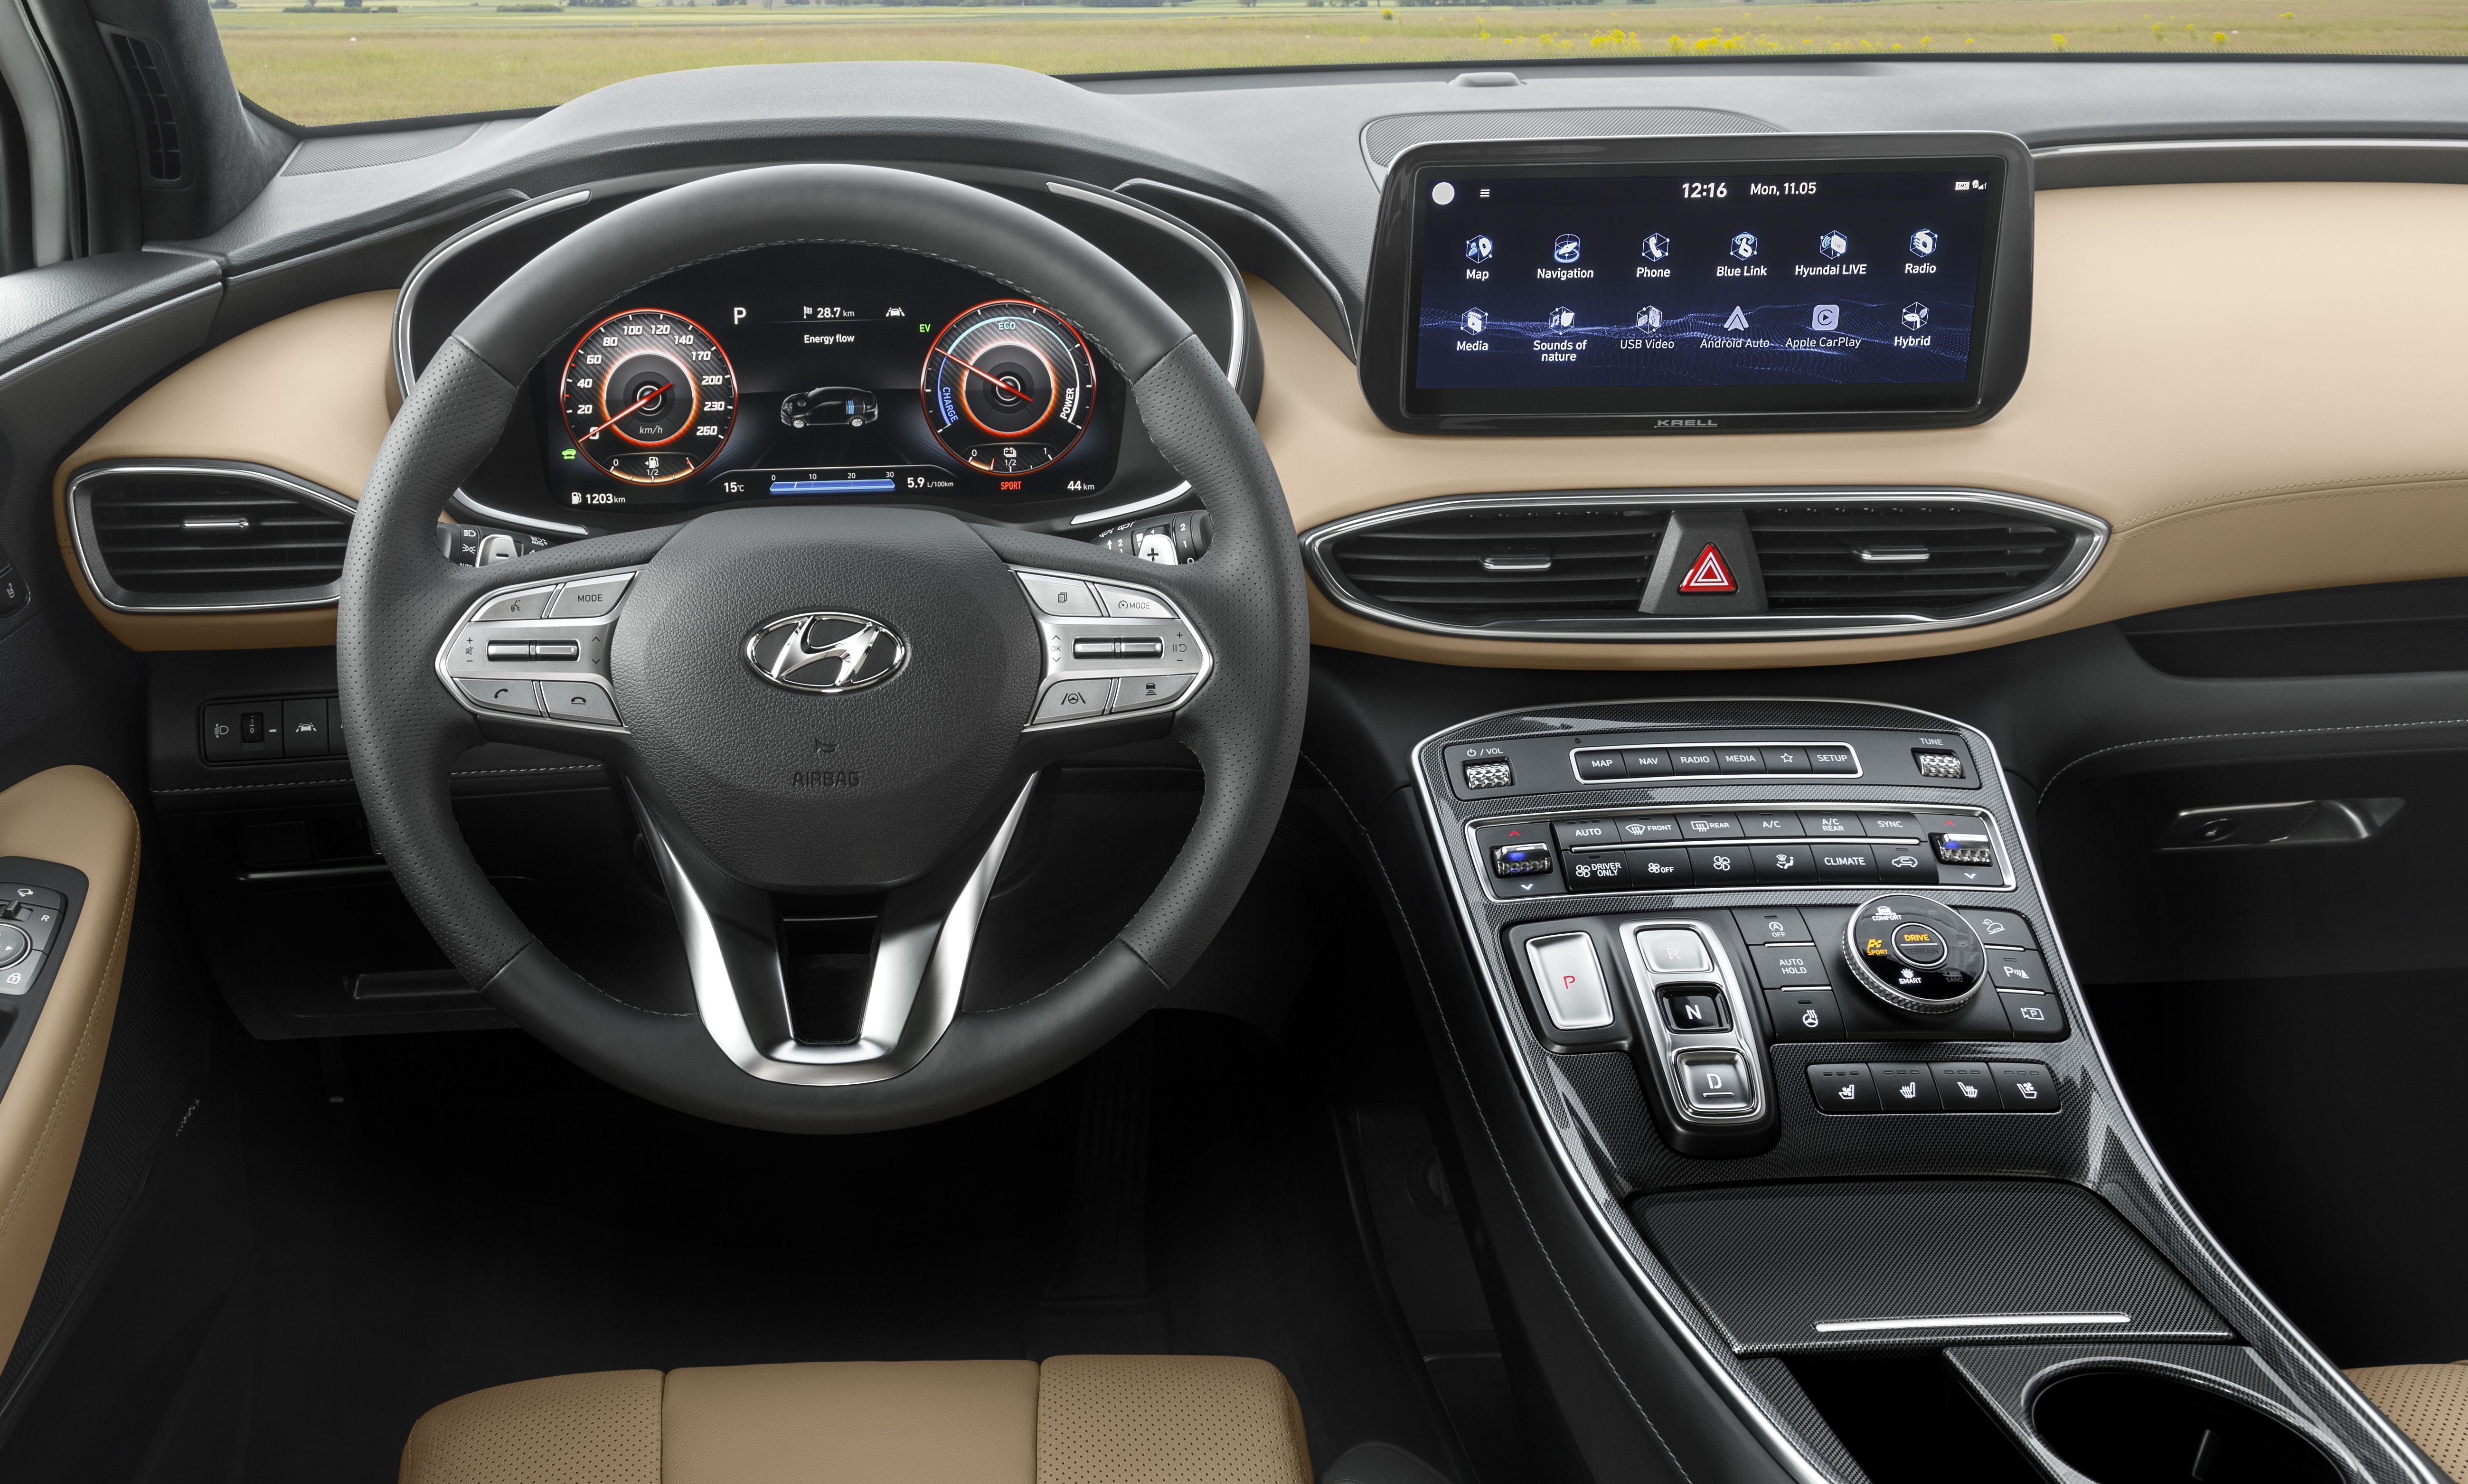 2021 Hyundai Santa Fe - What's New for 2021?